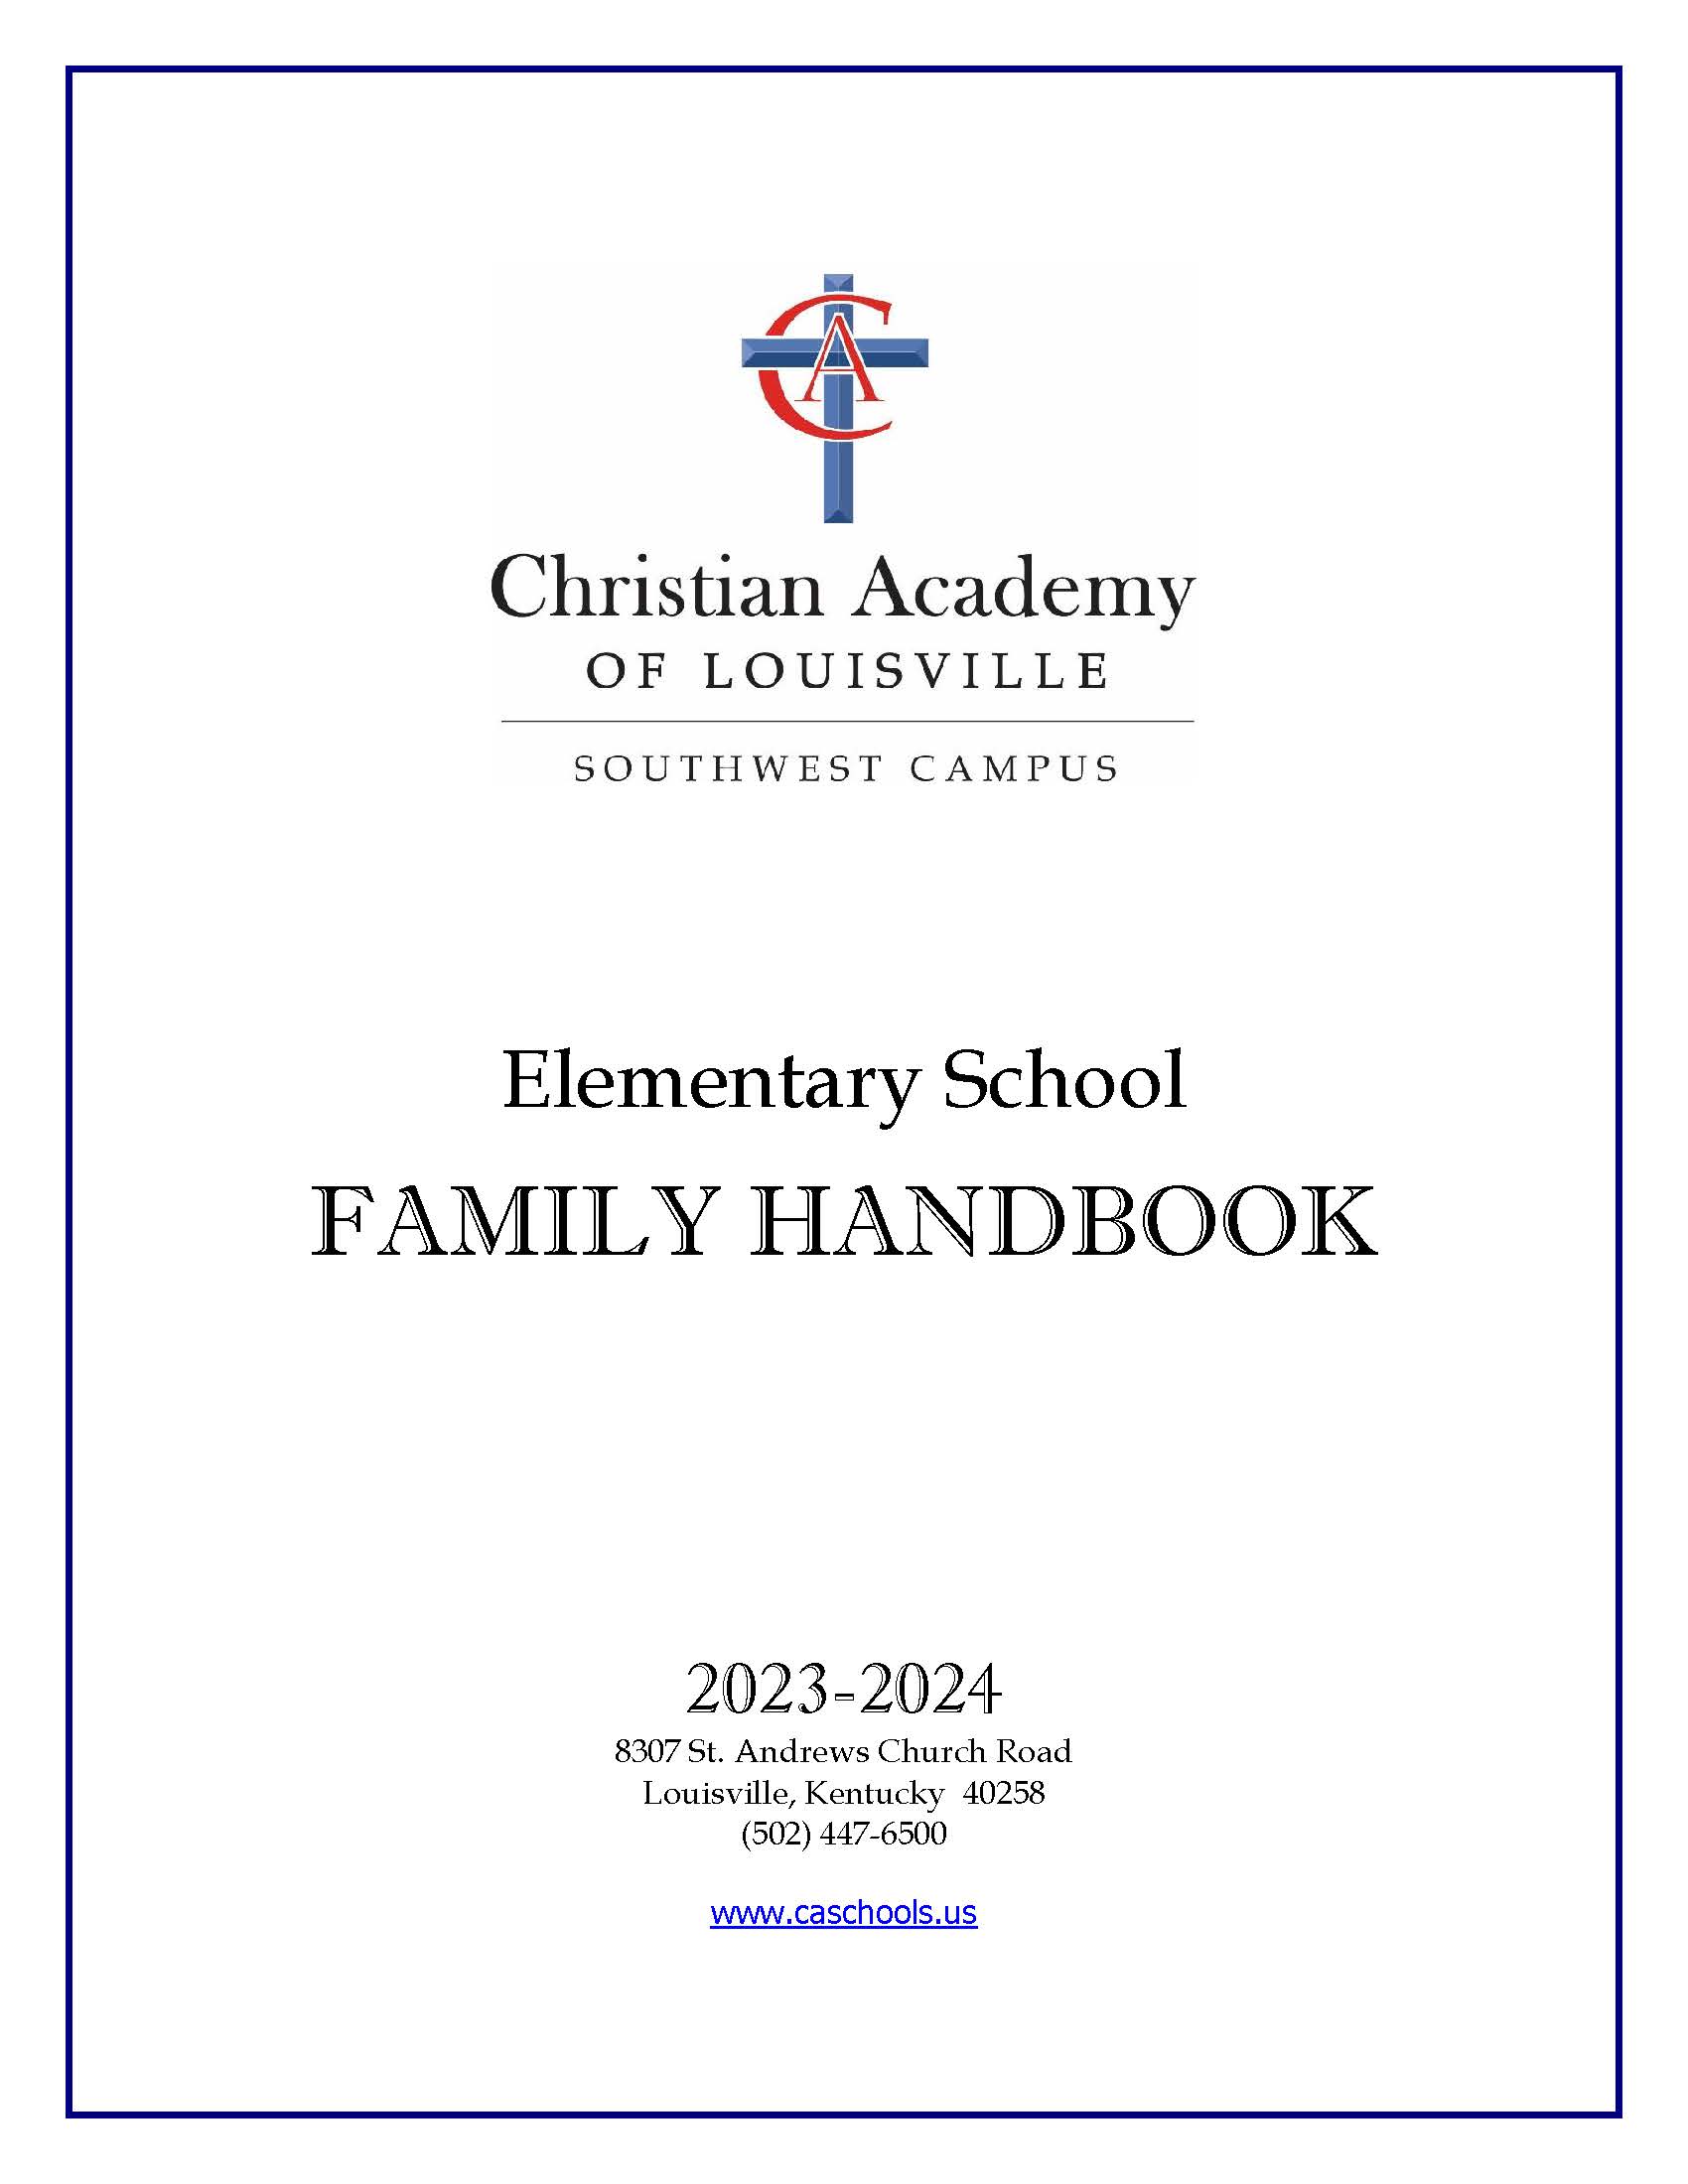 Christian Academy School System | Christian Academy of Louisville | Southwest Elementary | 2023-2024 Family Handbook